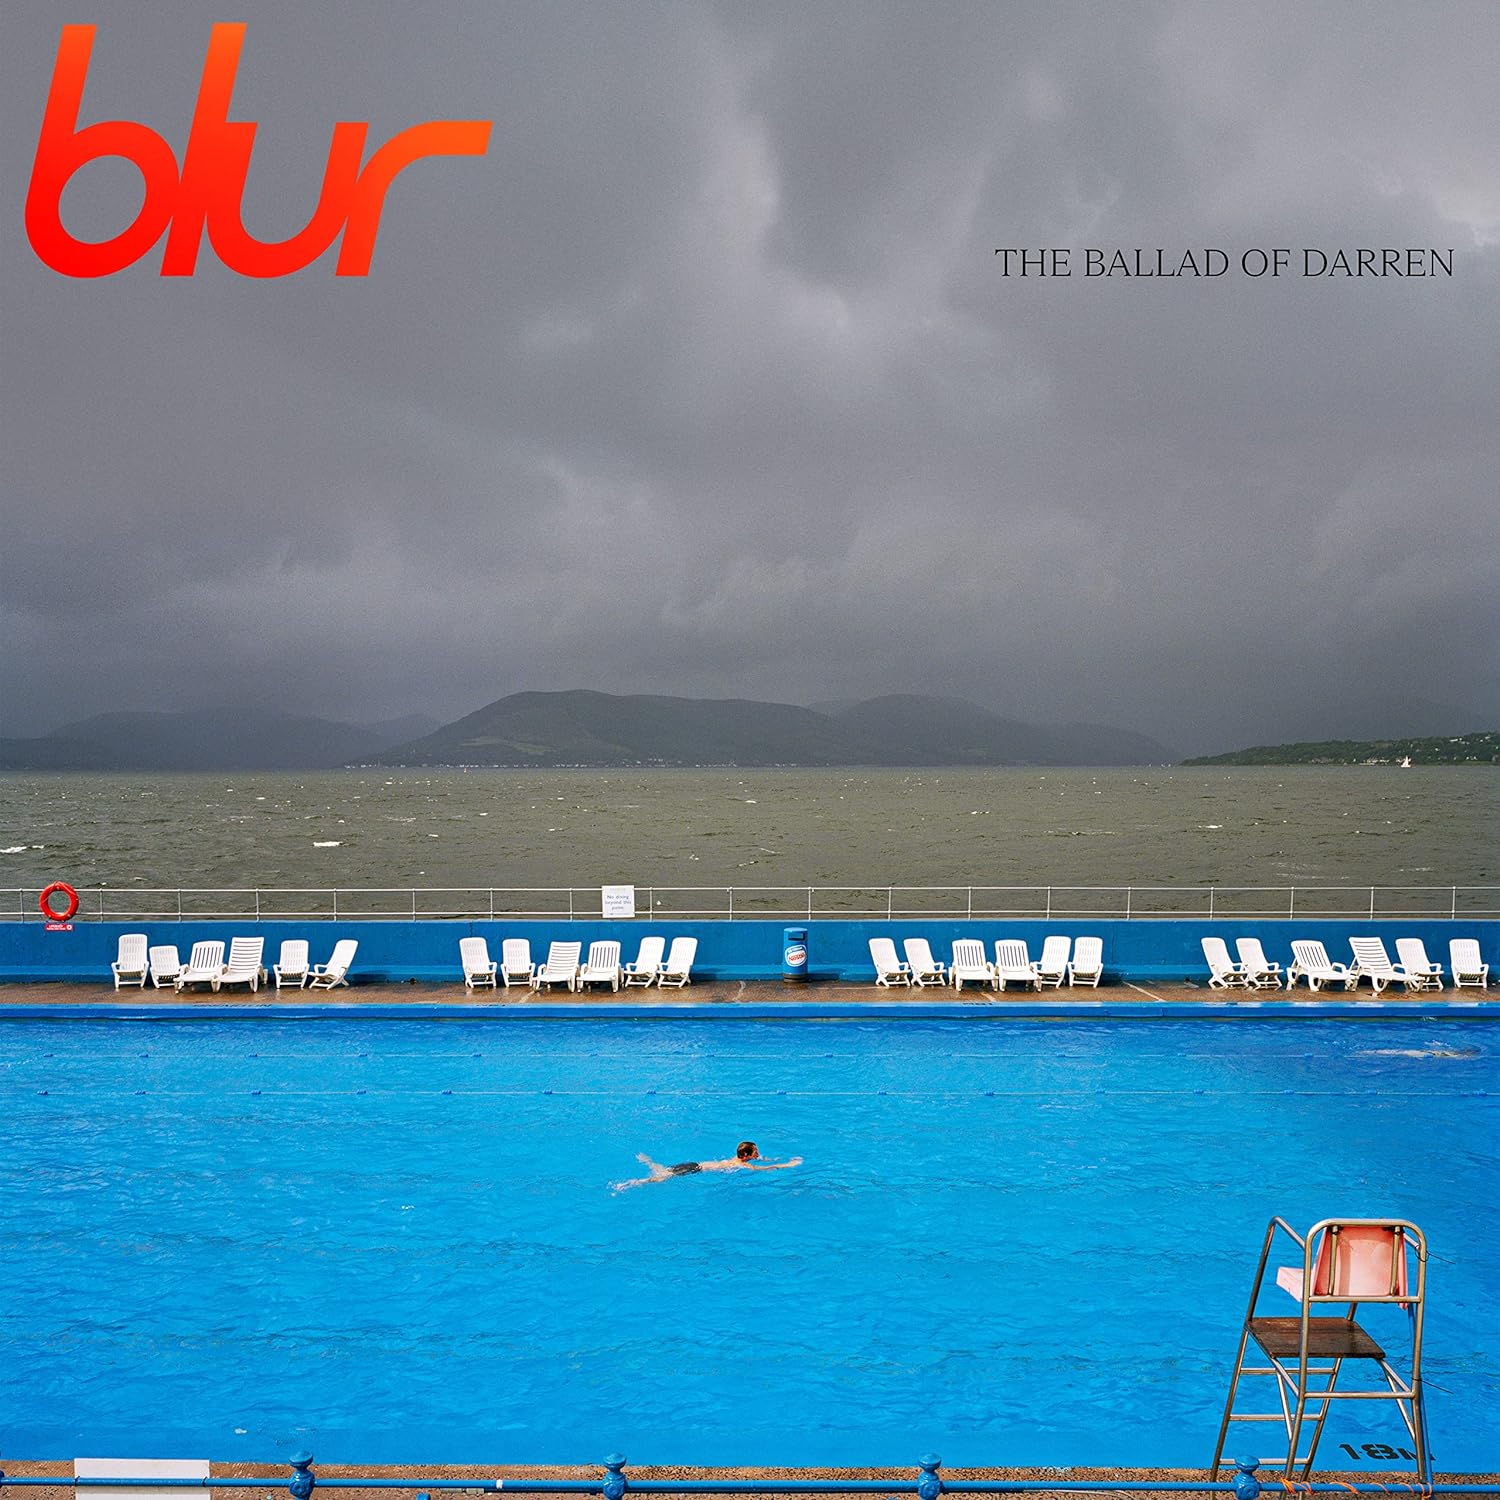 Buy Blur - The Ballad Of Darren New or Used via Amazon